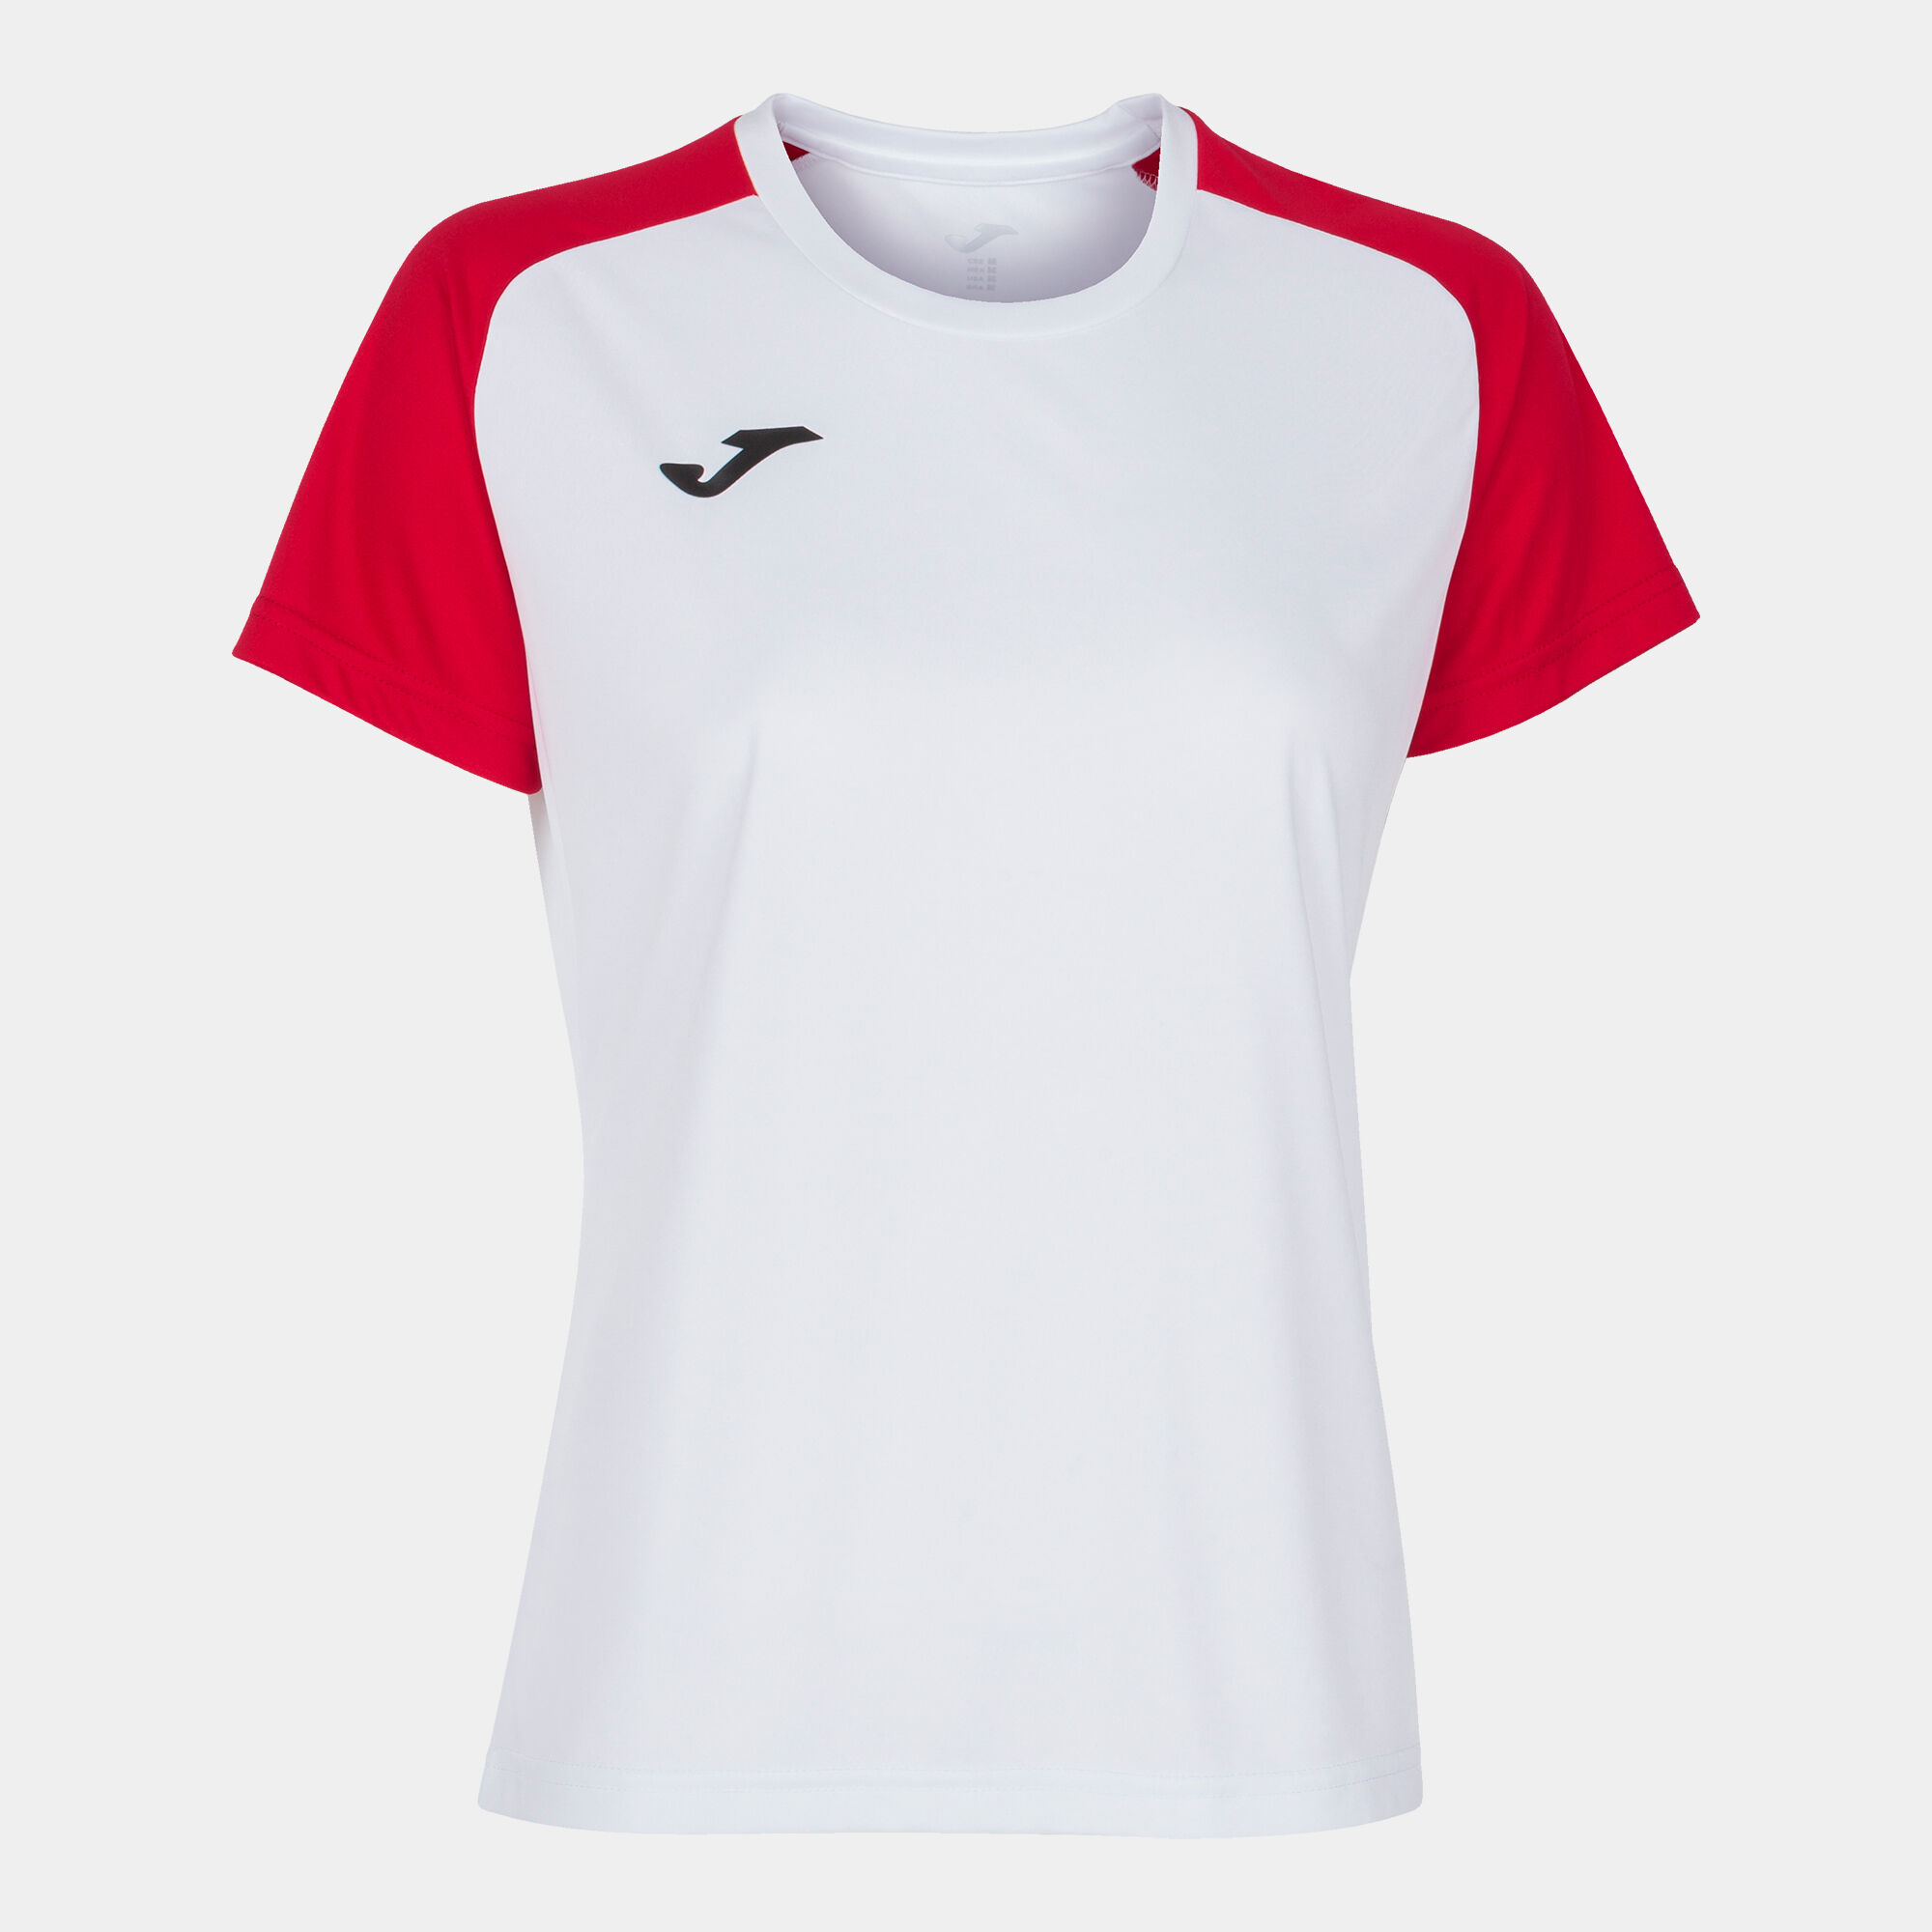 Camiseta manga corta mujer Academy IV rojo blanco